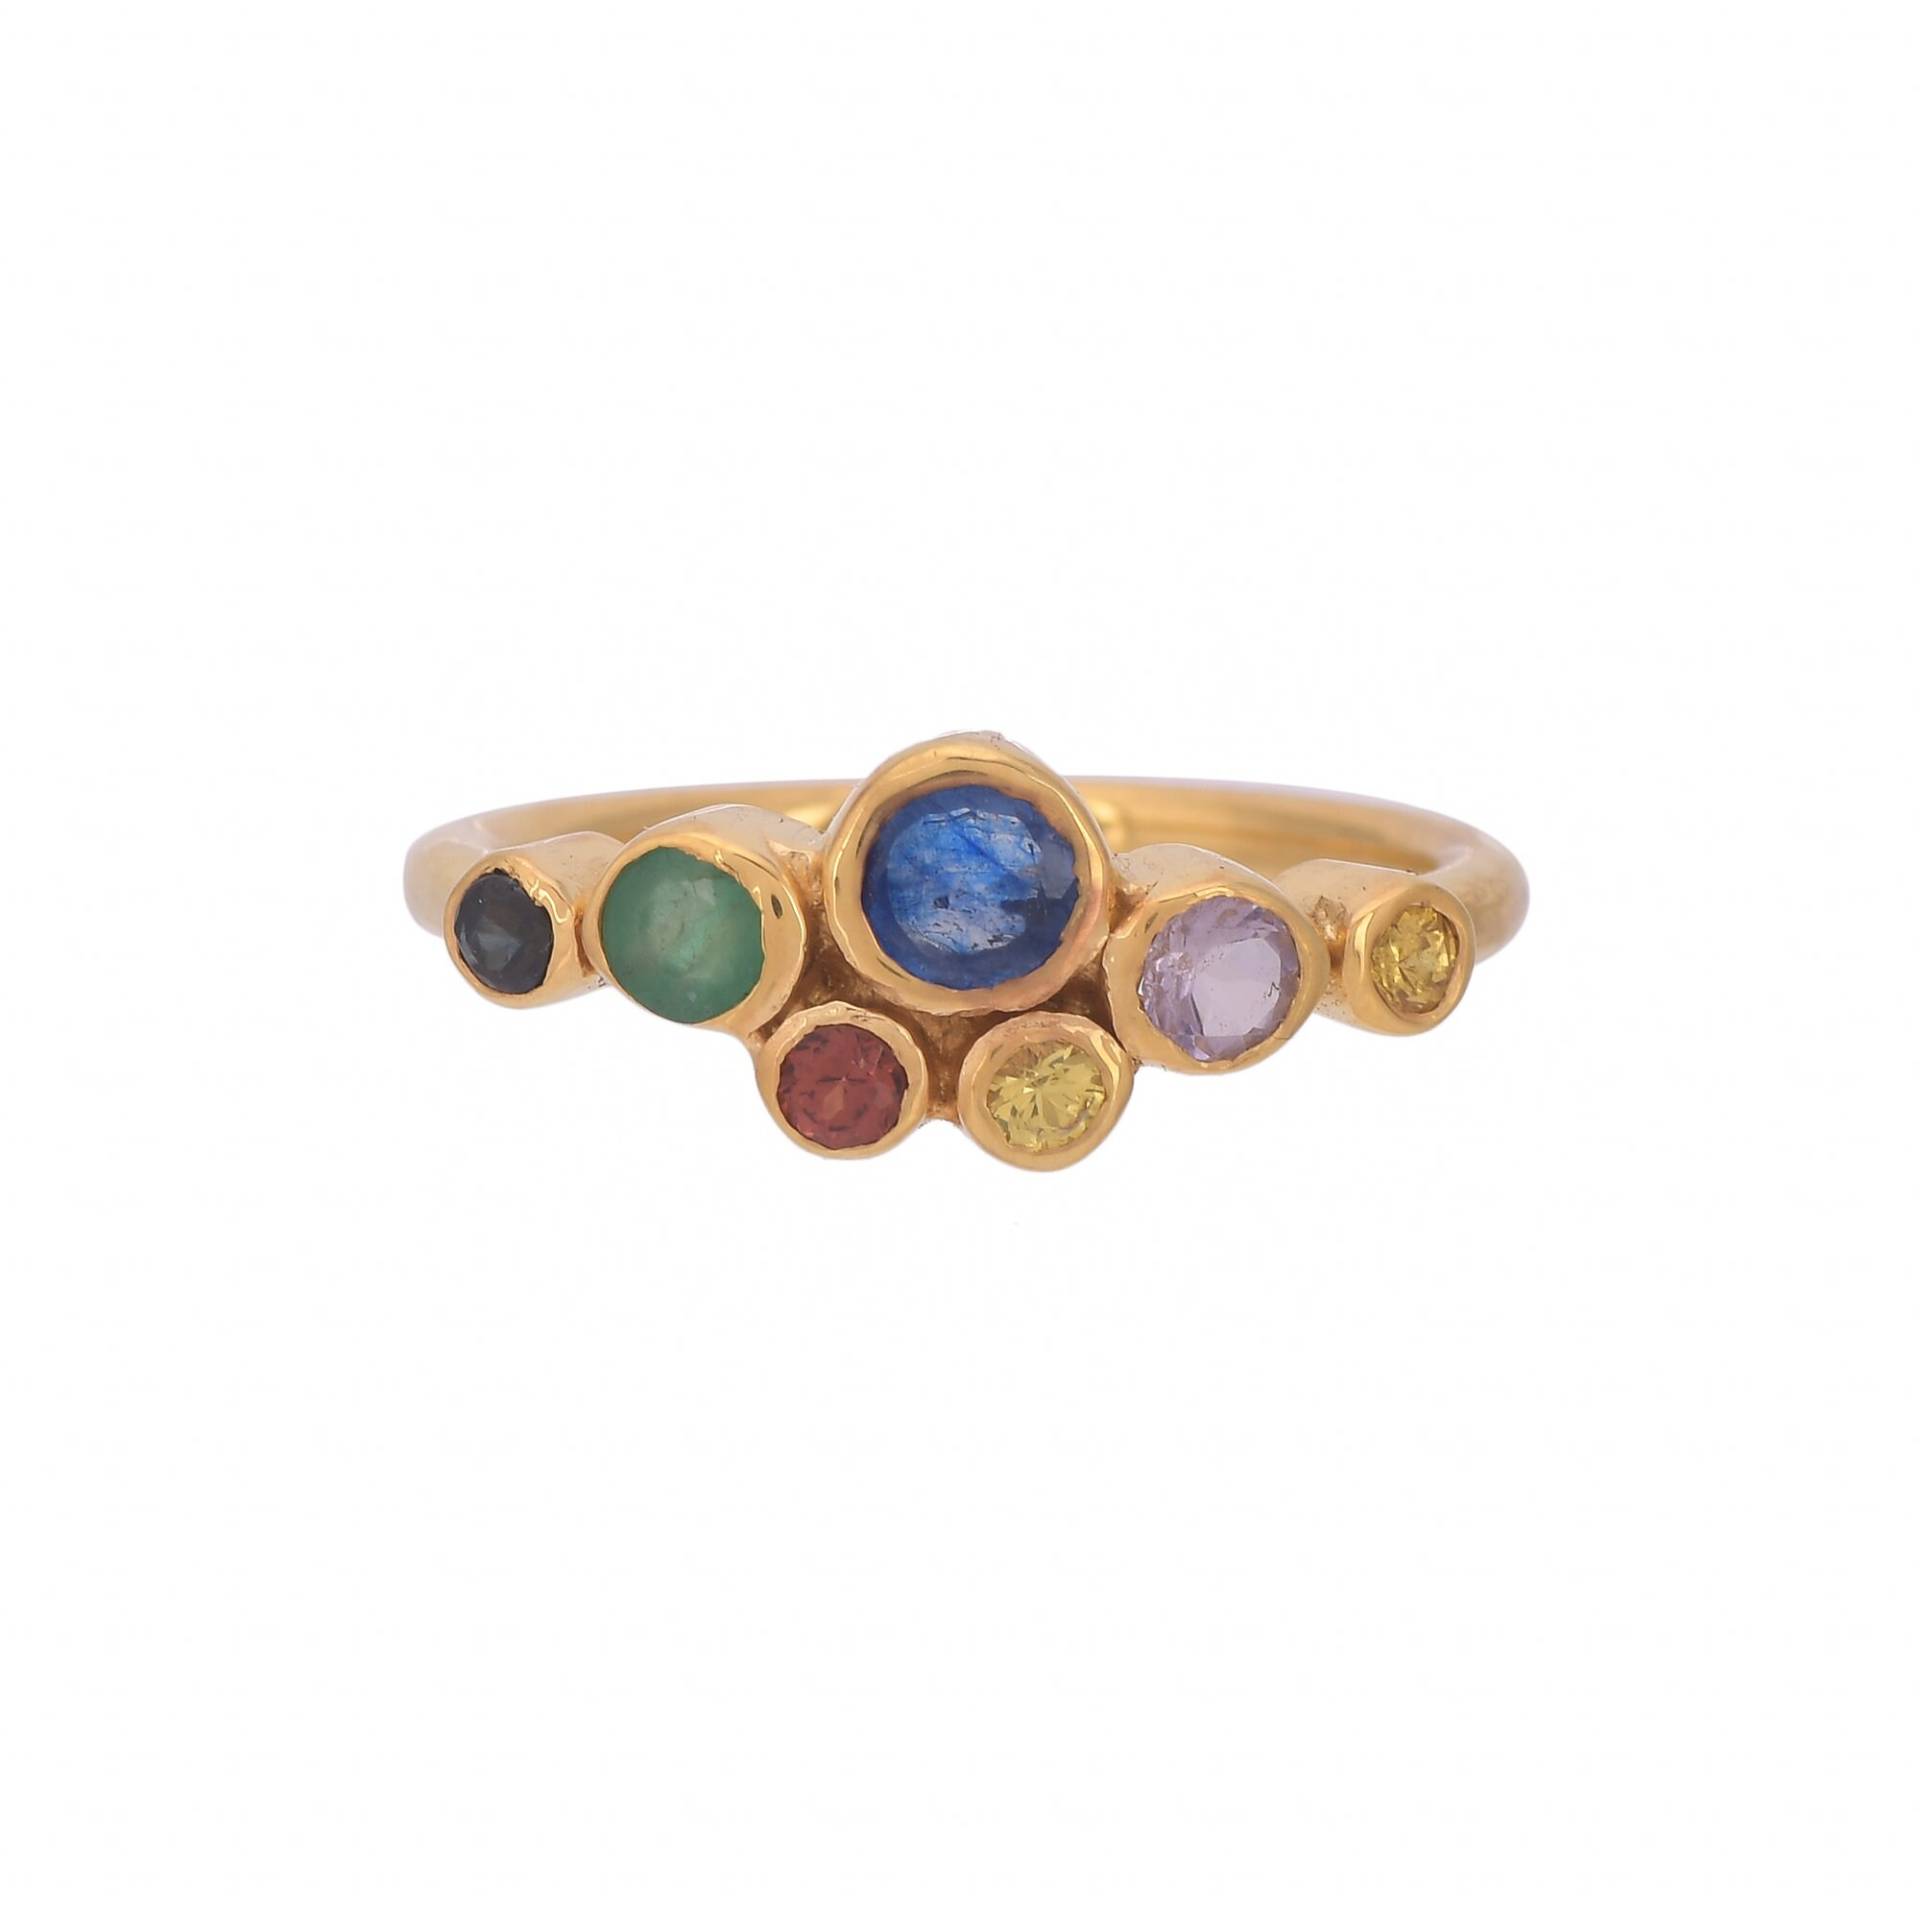 Blauer Saphir, Smaragd, Amethyst & Mehrfarbiger Saphir 14K Gold Vermeil Over Sterling Silber Ring von TreasureDiary